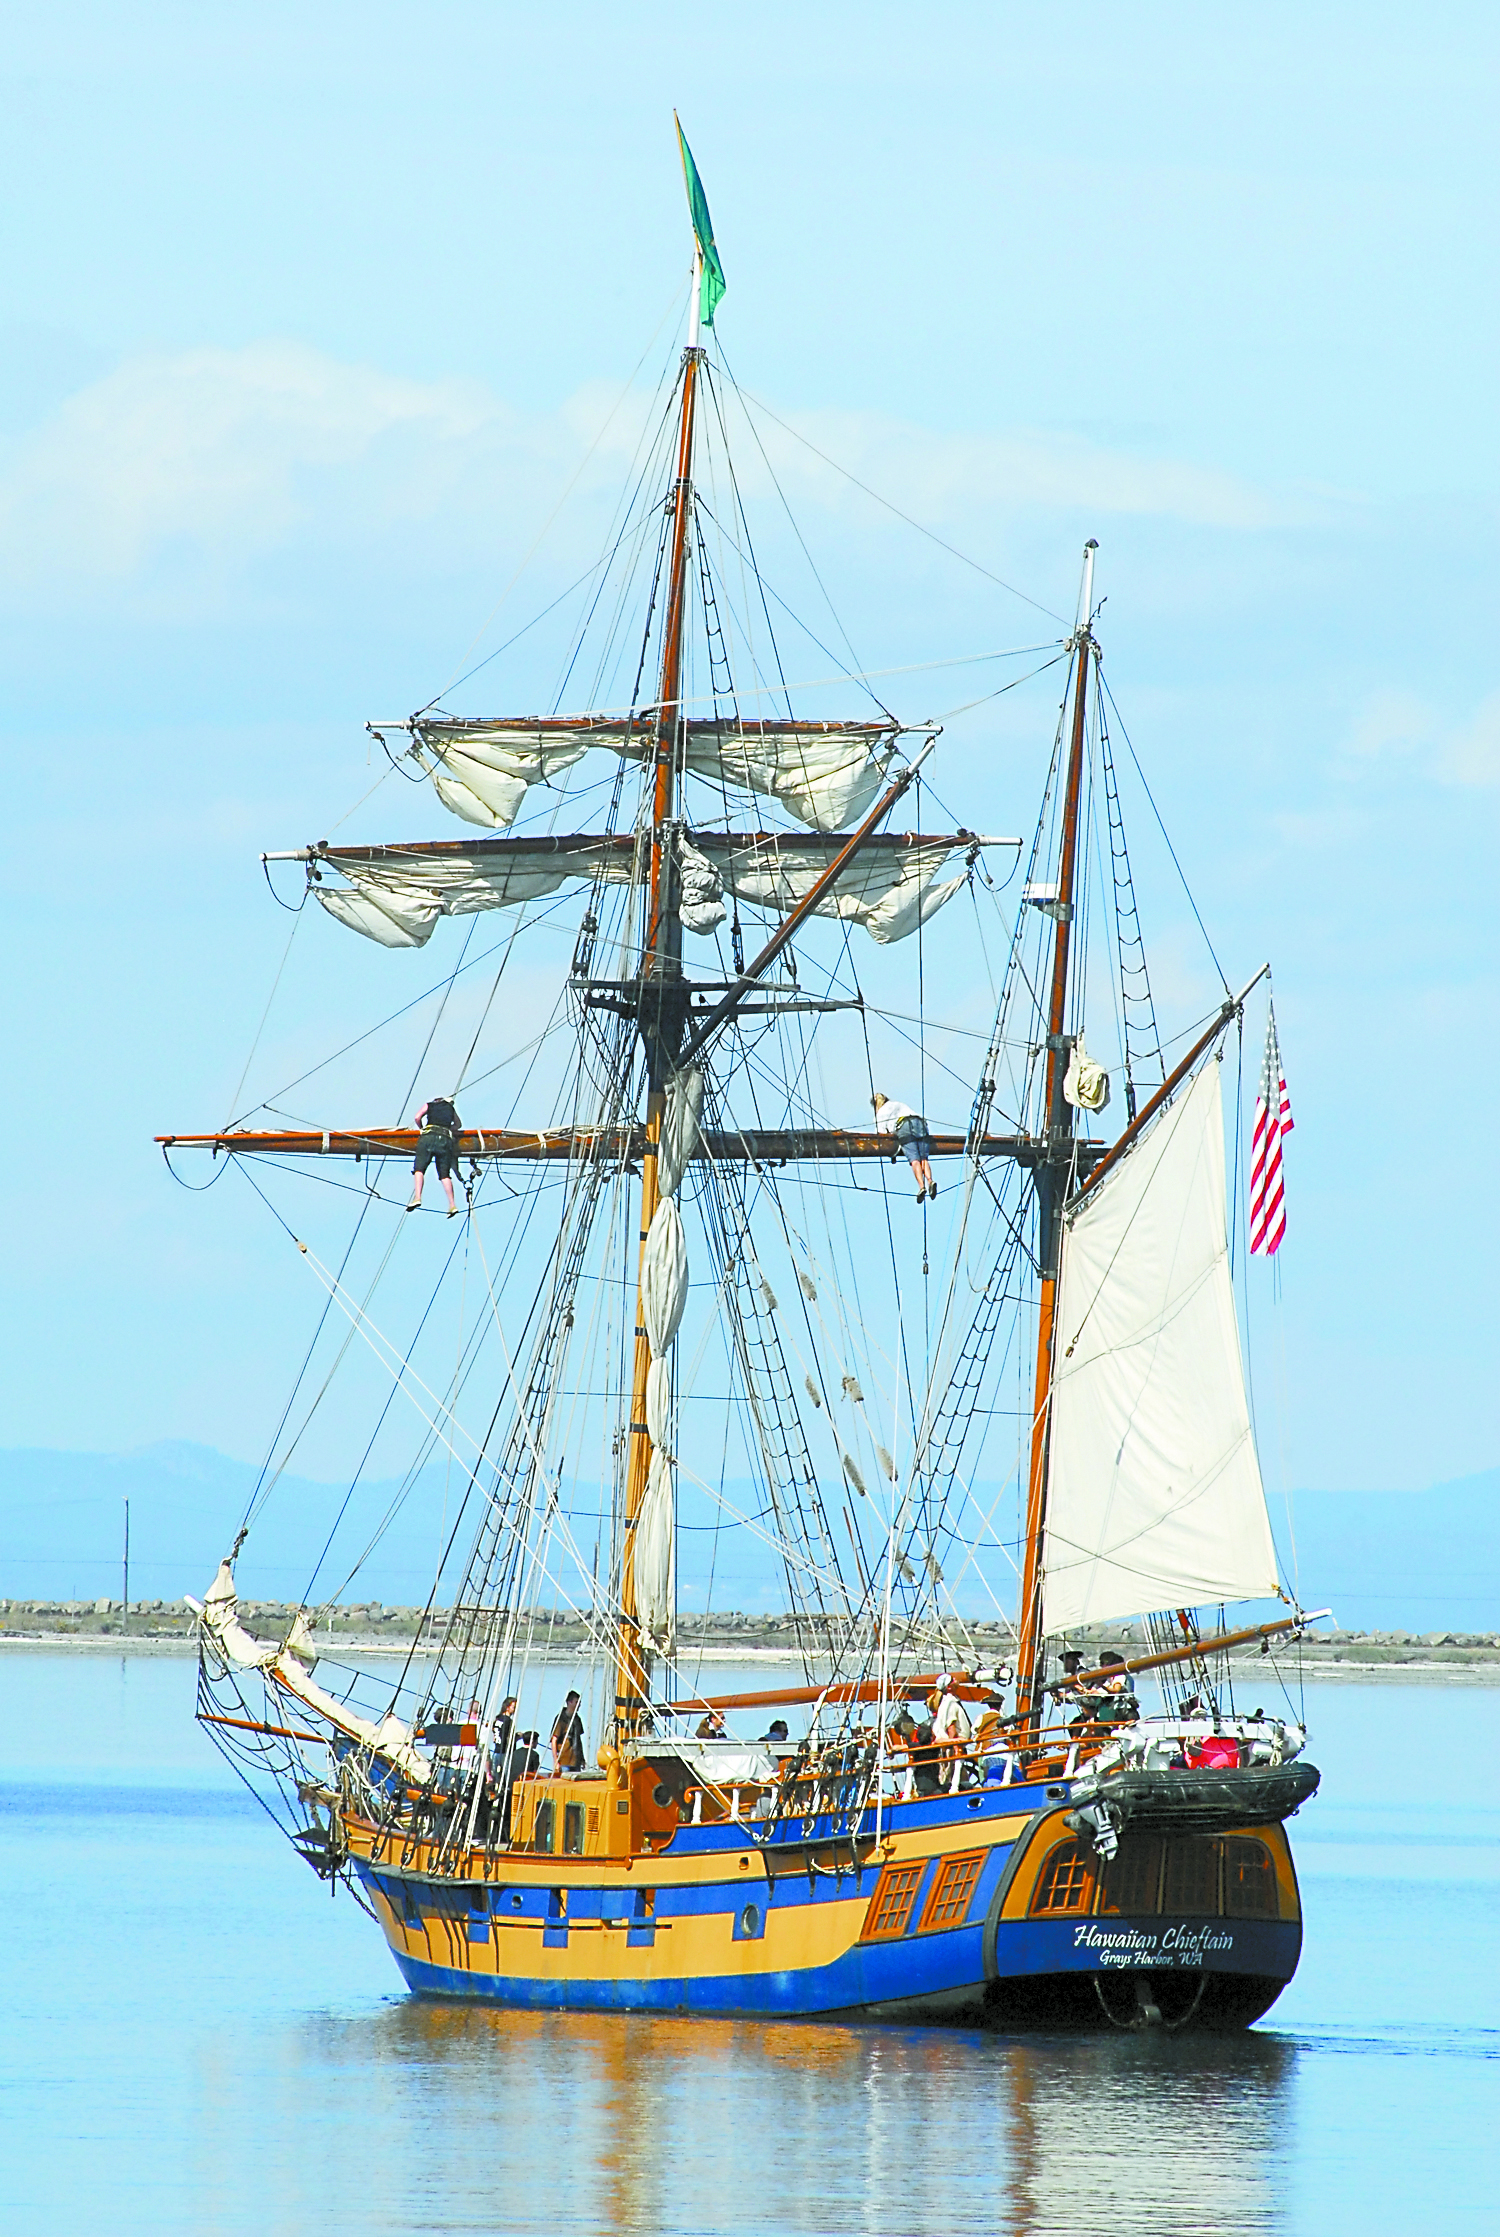 The Hawaiian Chieftain sails into Port Angeles Harbor in 2010. Keith Thorpe/Peninsula Daily News